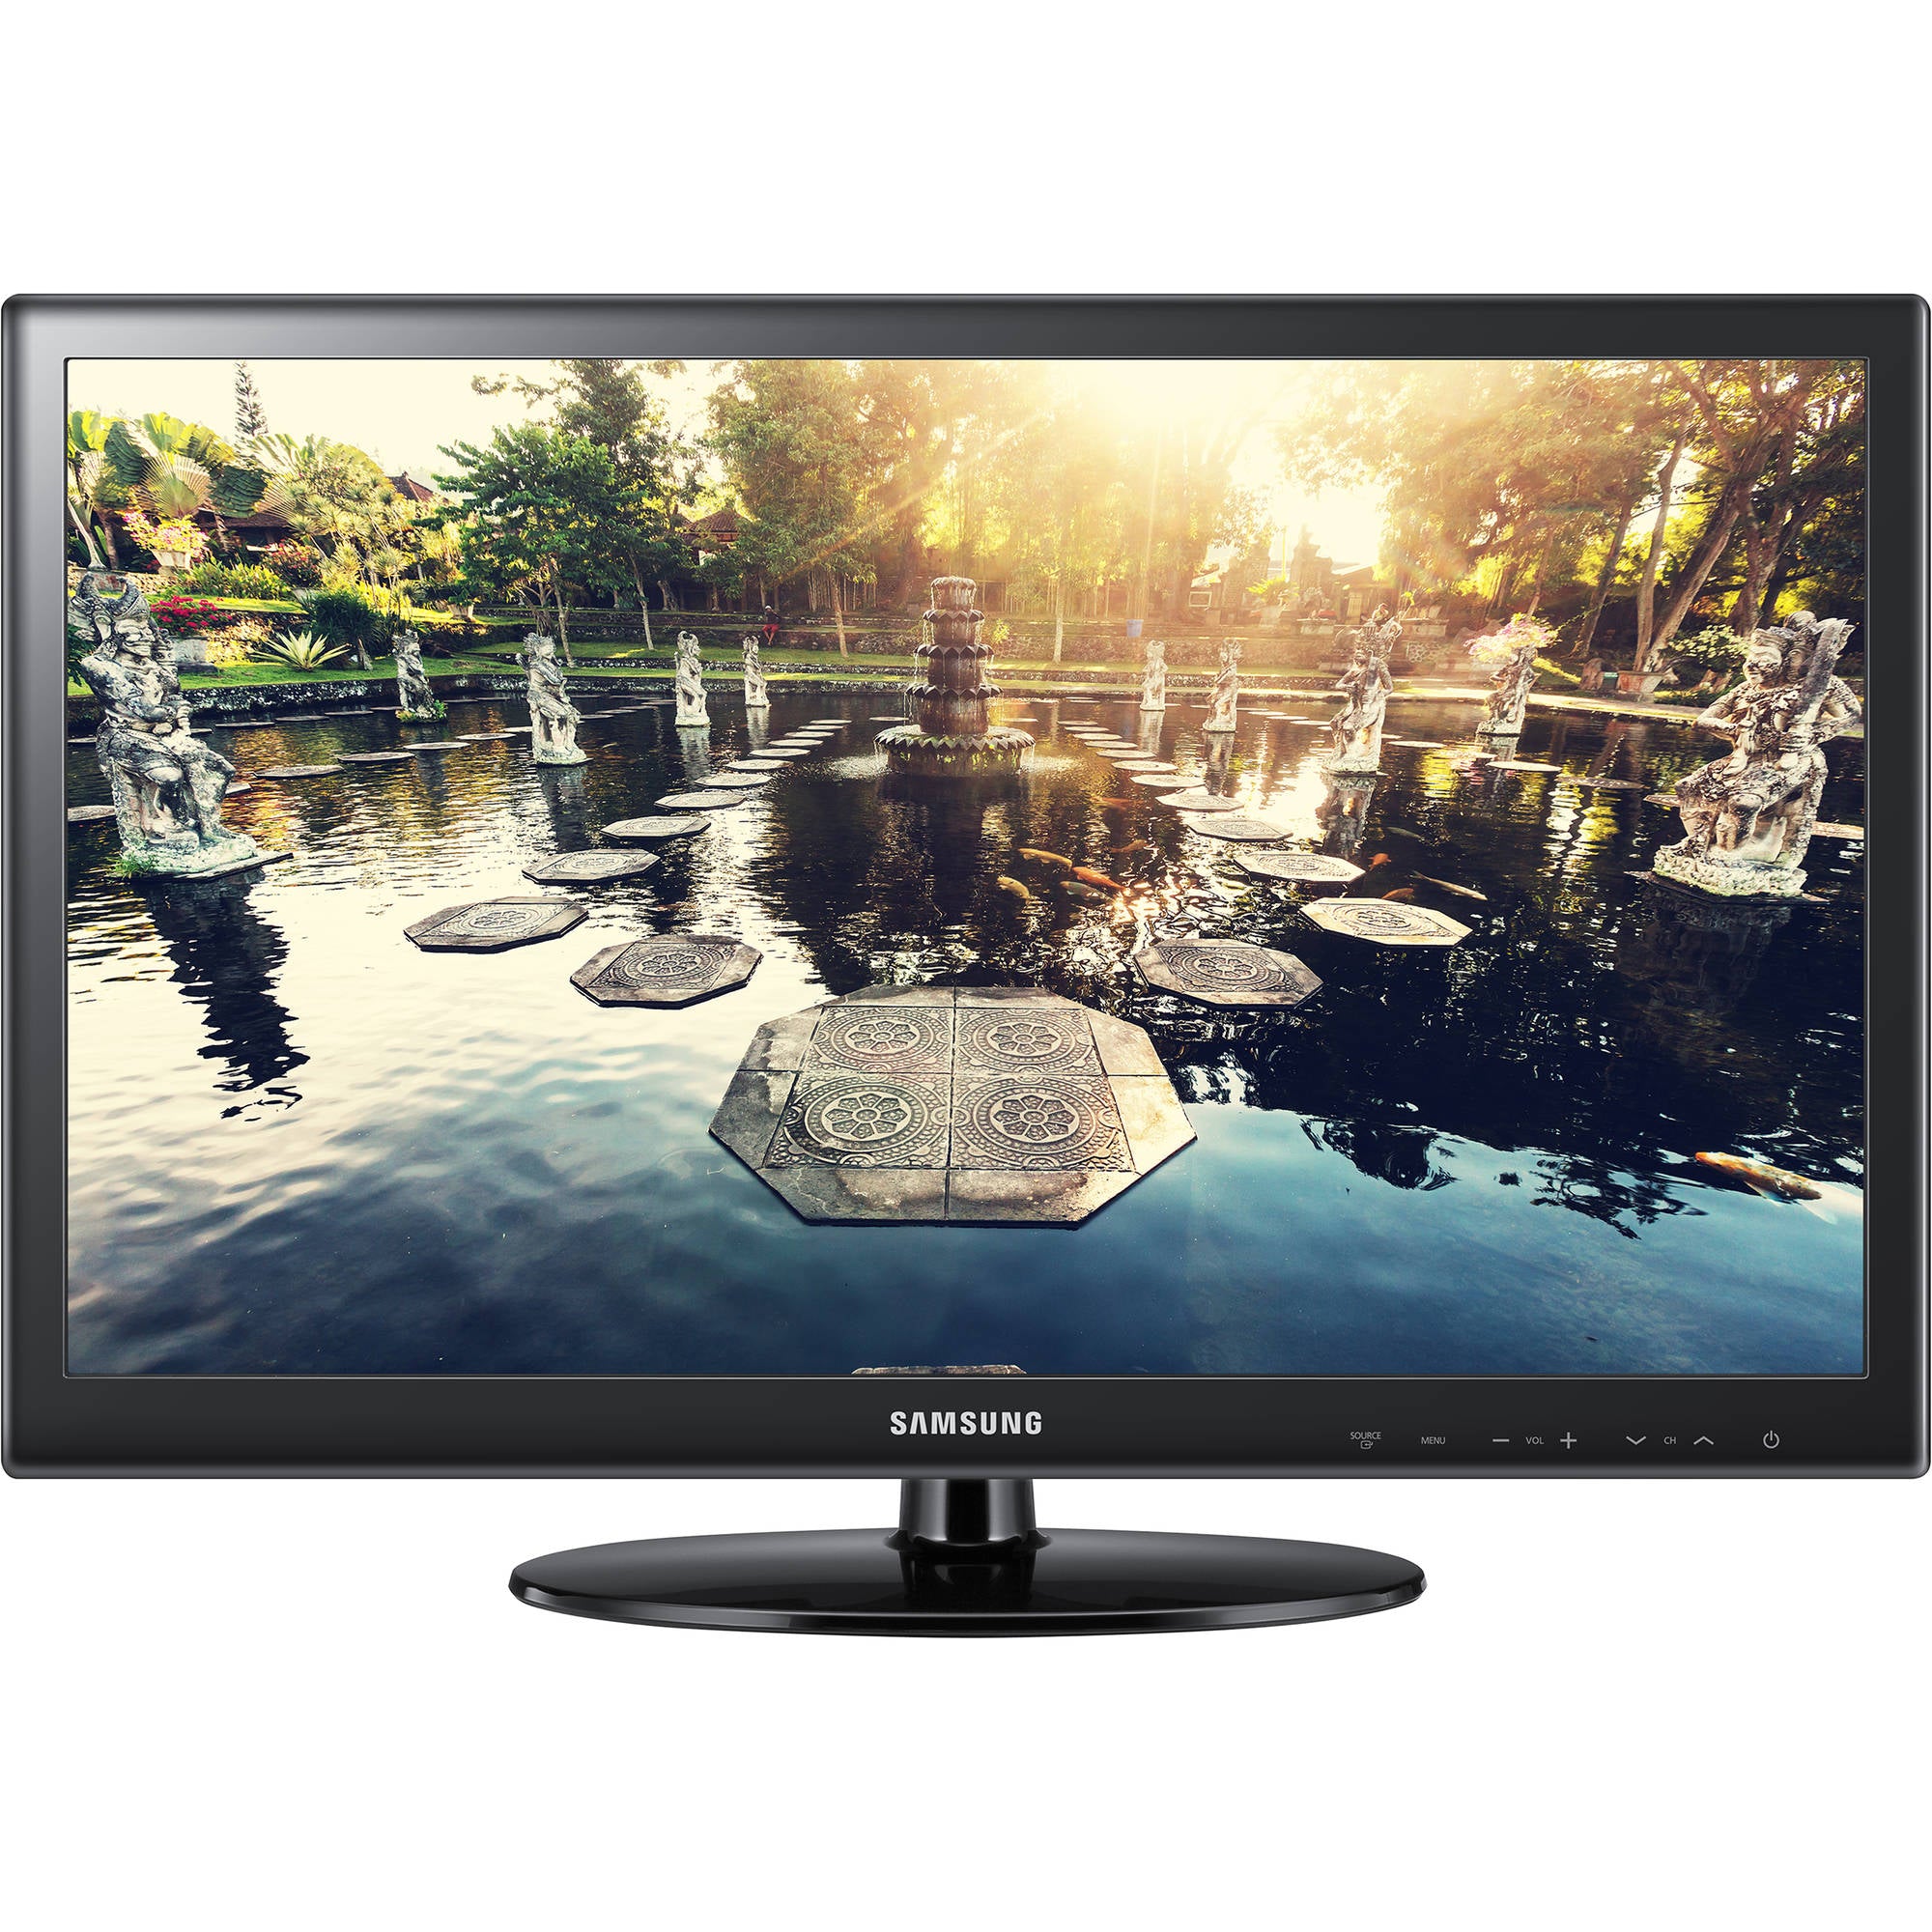 Samsung HG22NE690ZFXZA 22" Full HD Slim Direct-Lit LED Hospitality Smart TV (Black) - Samsung Parts USA